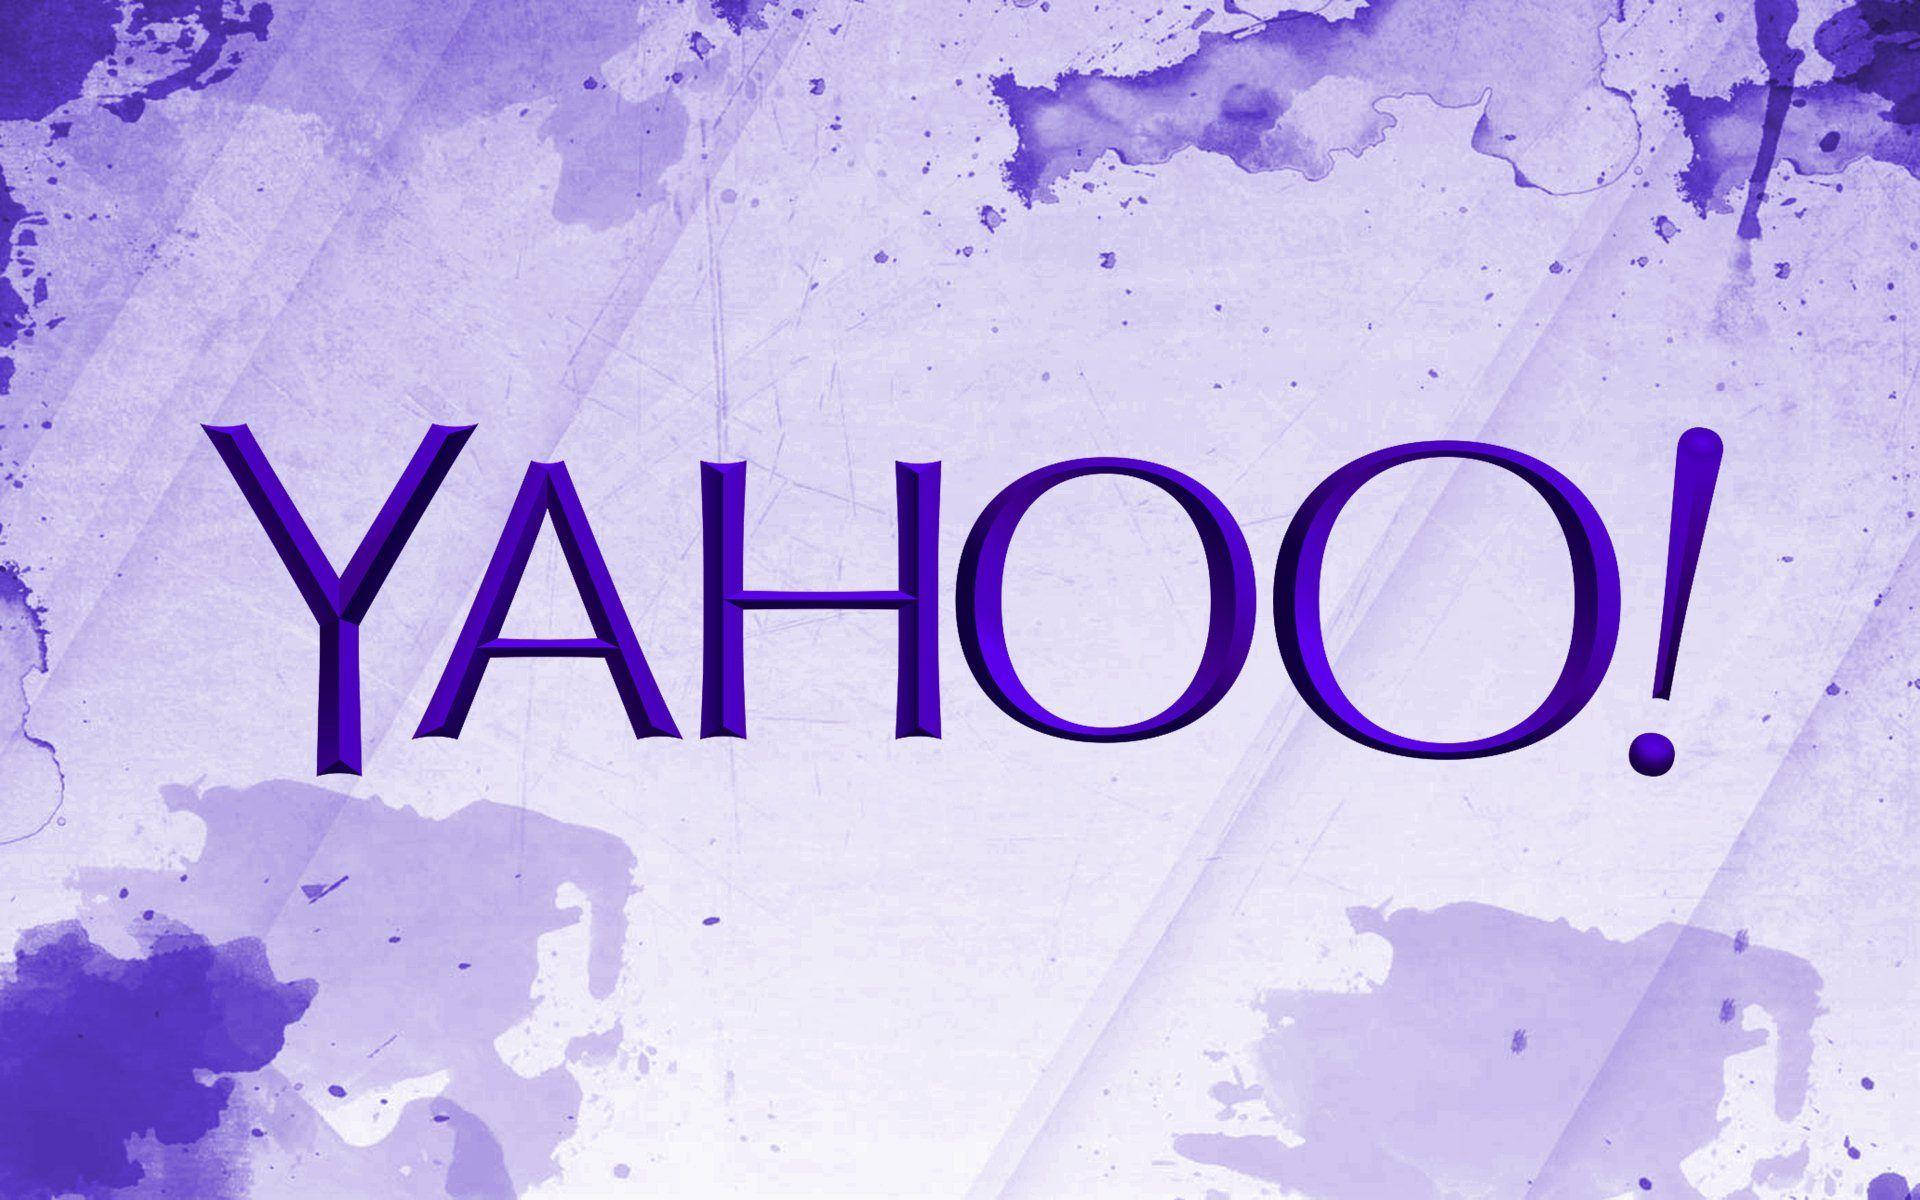 Yahoo Purple Paint Splatters Background